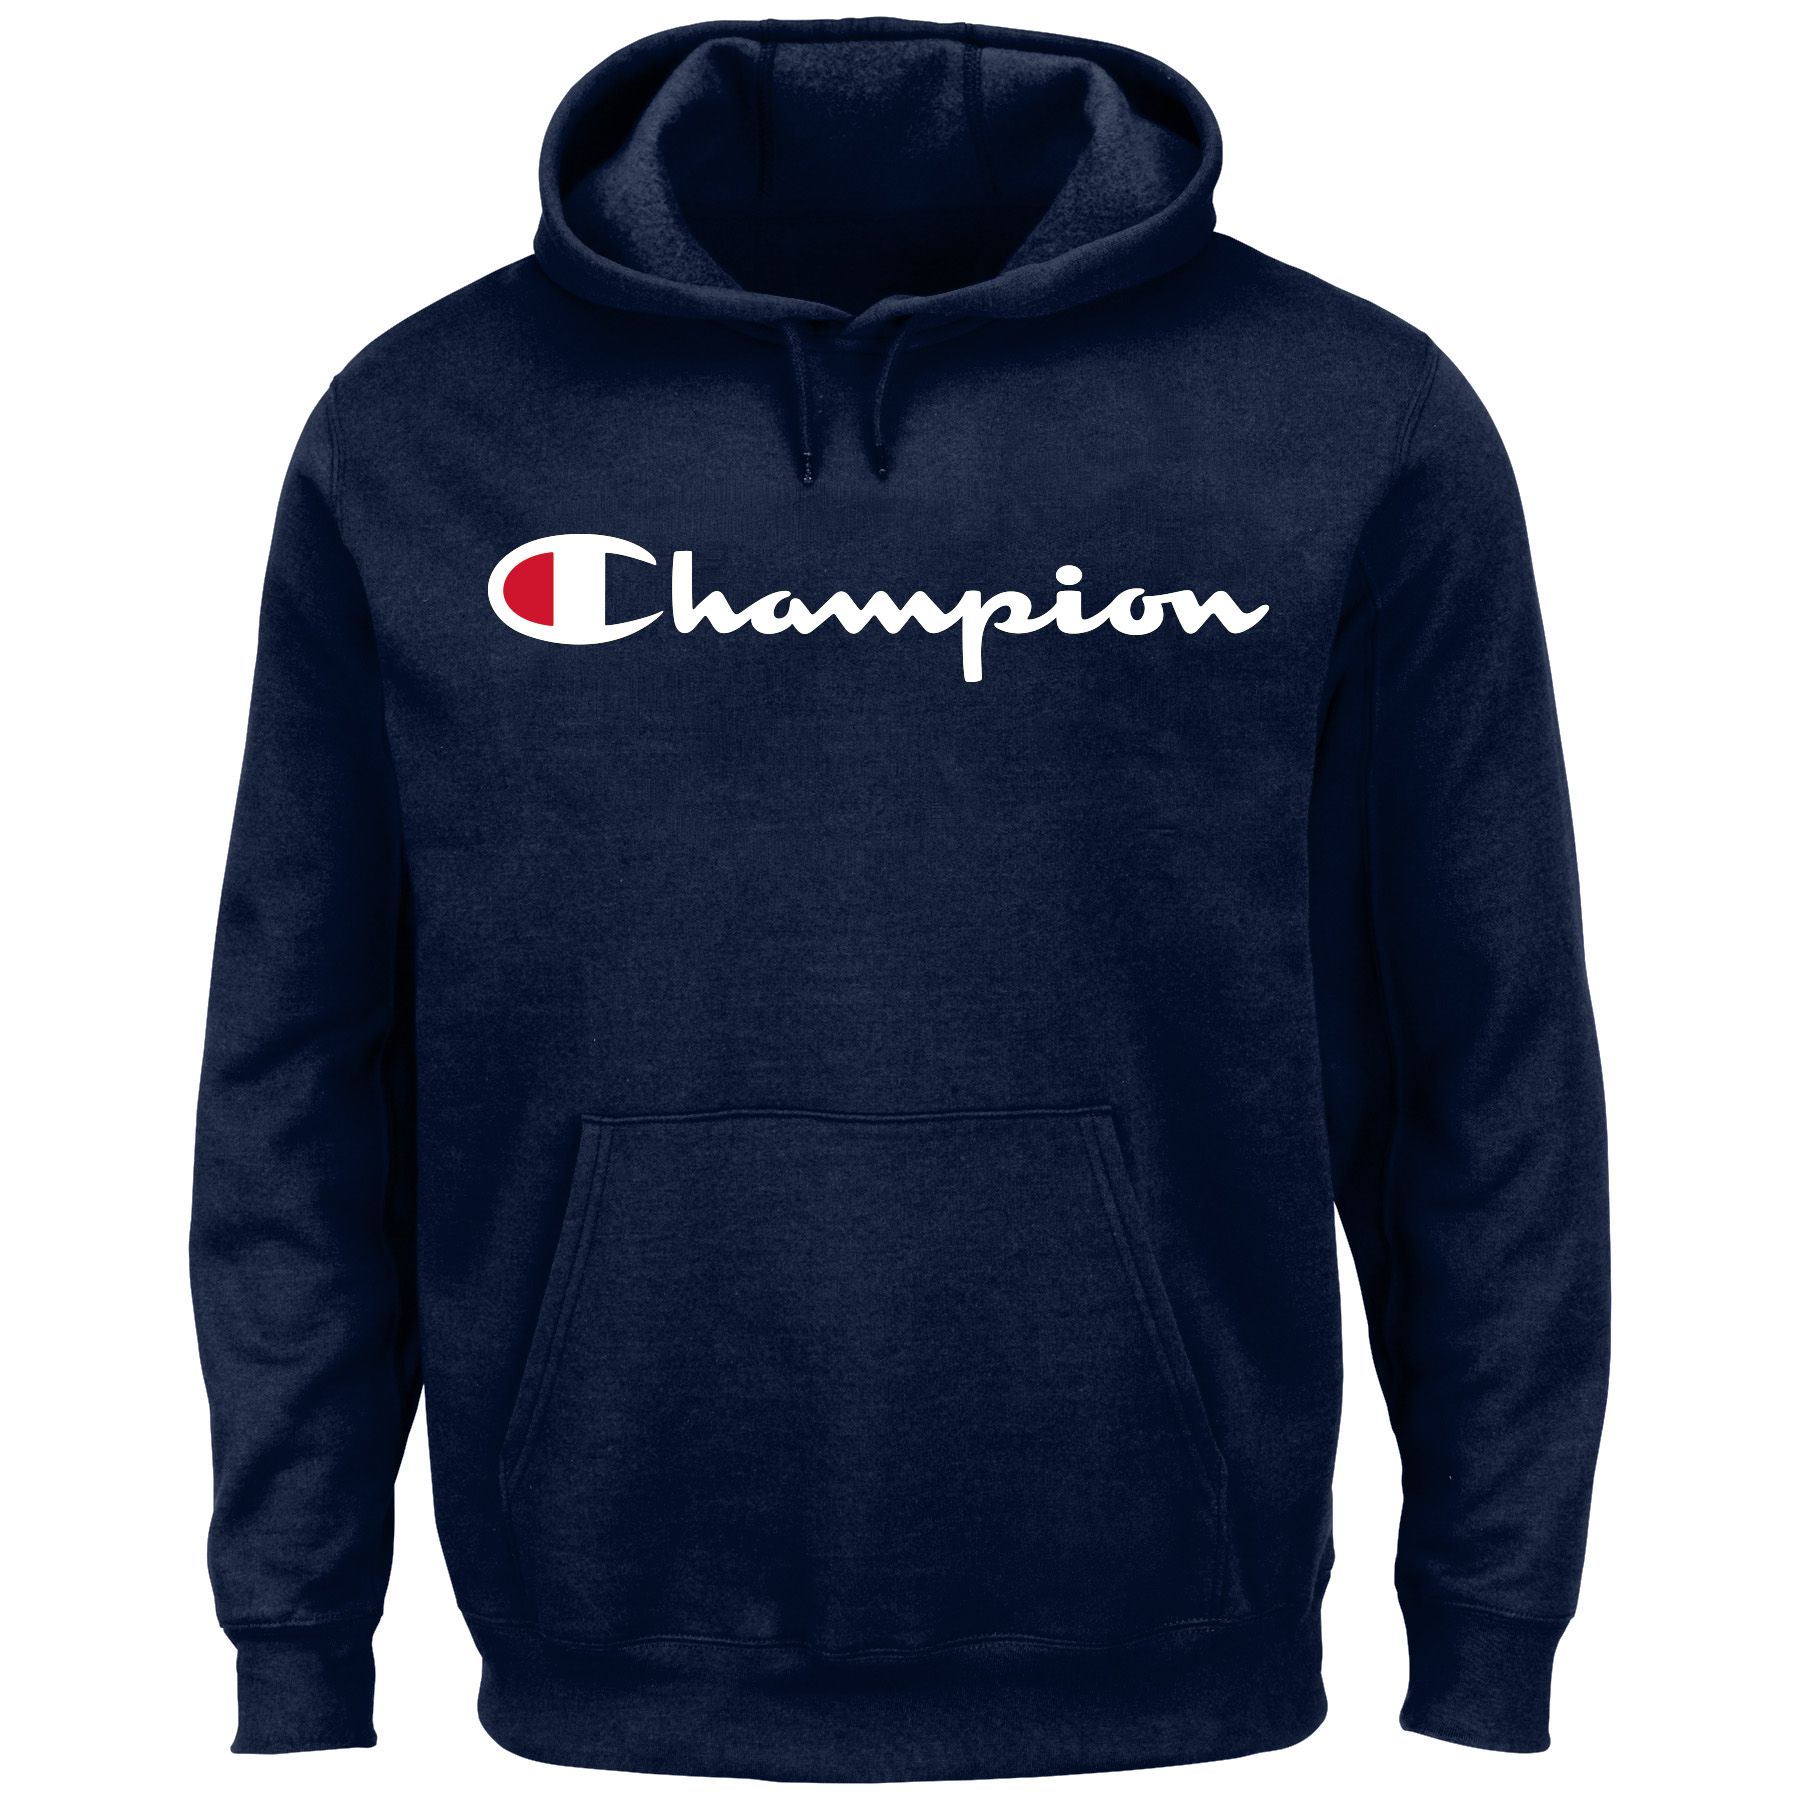 champion xlt sweatshirt